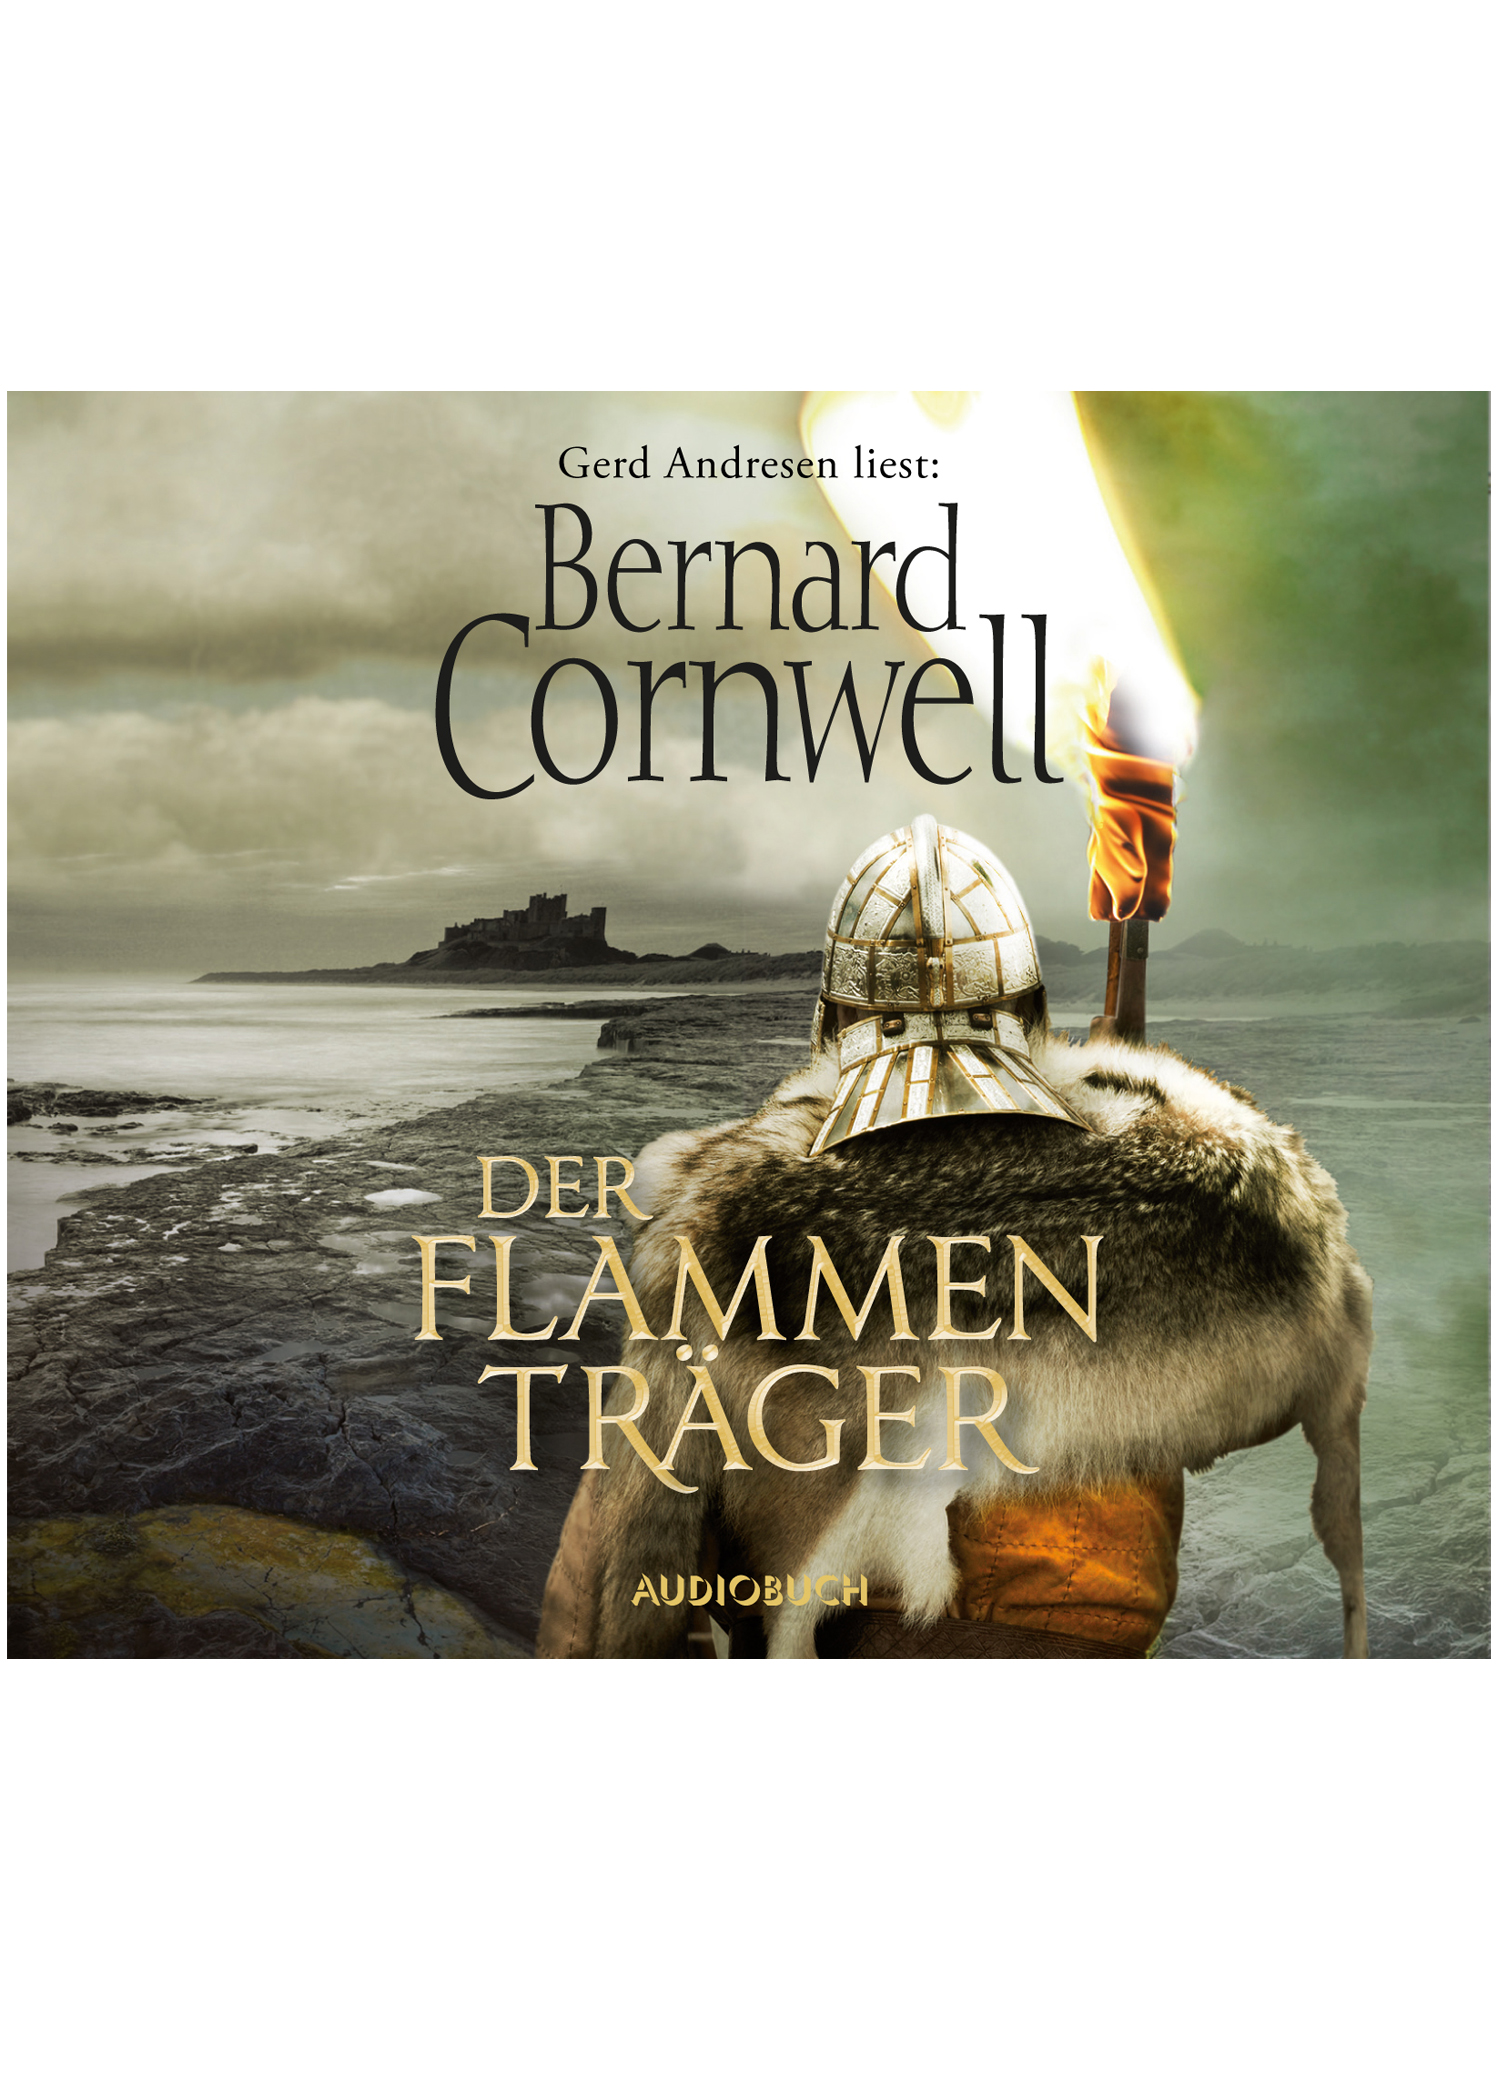 Hörbuch: Der Flammenträger von Bernard Cornwell